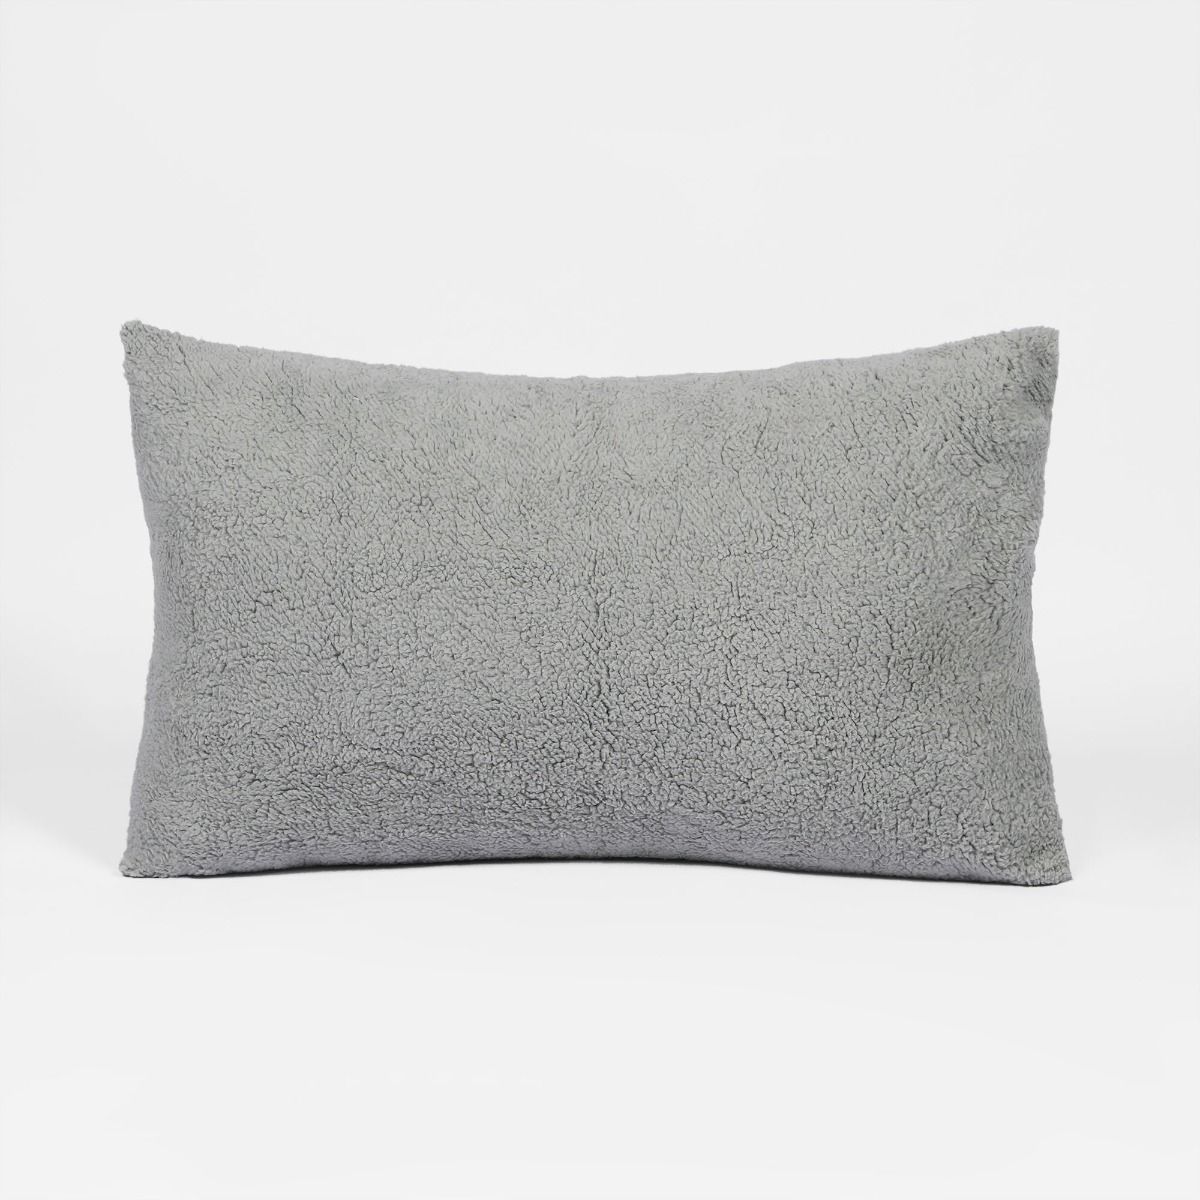 OHS Teddy Fleece Pillow - Charcoal